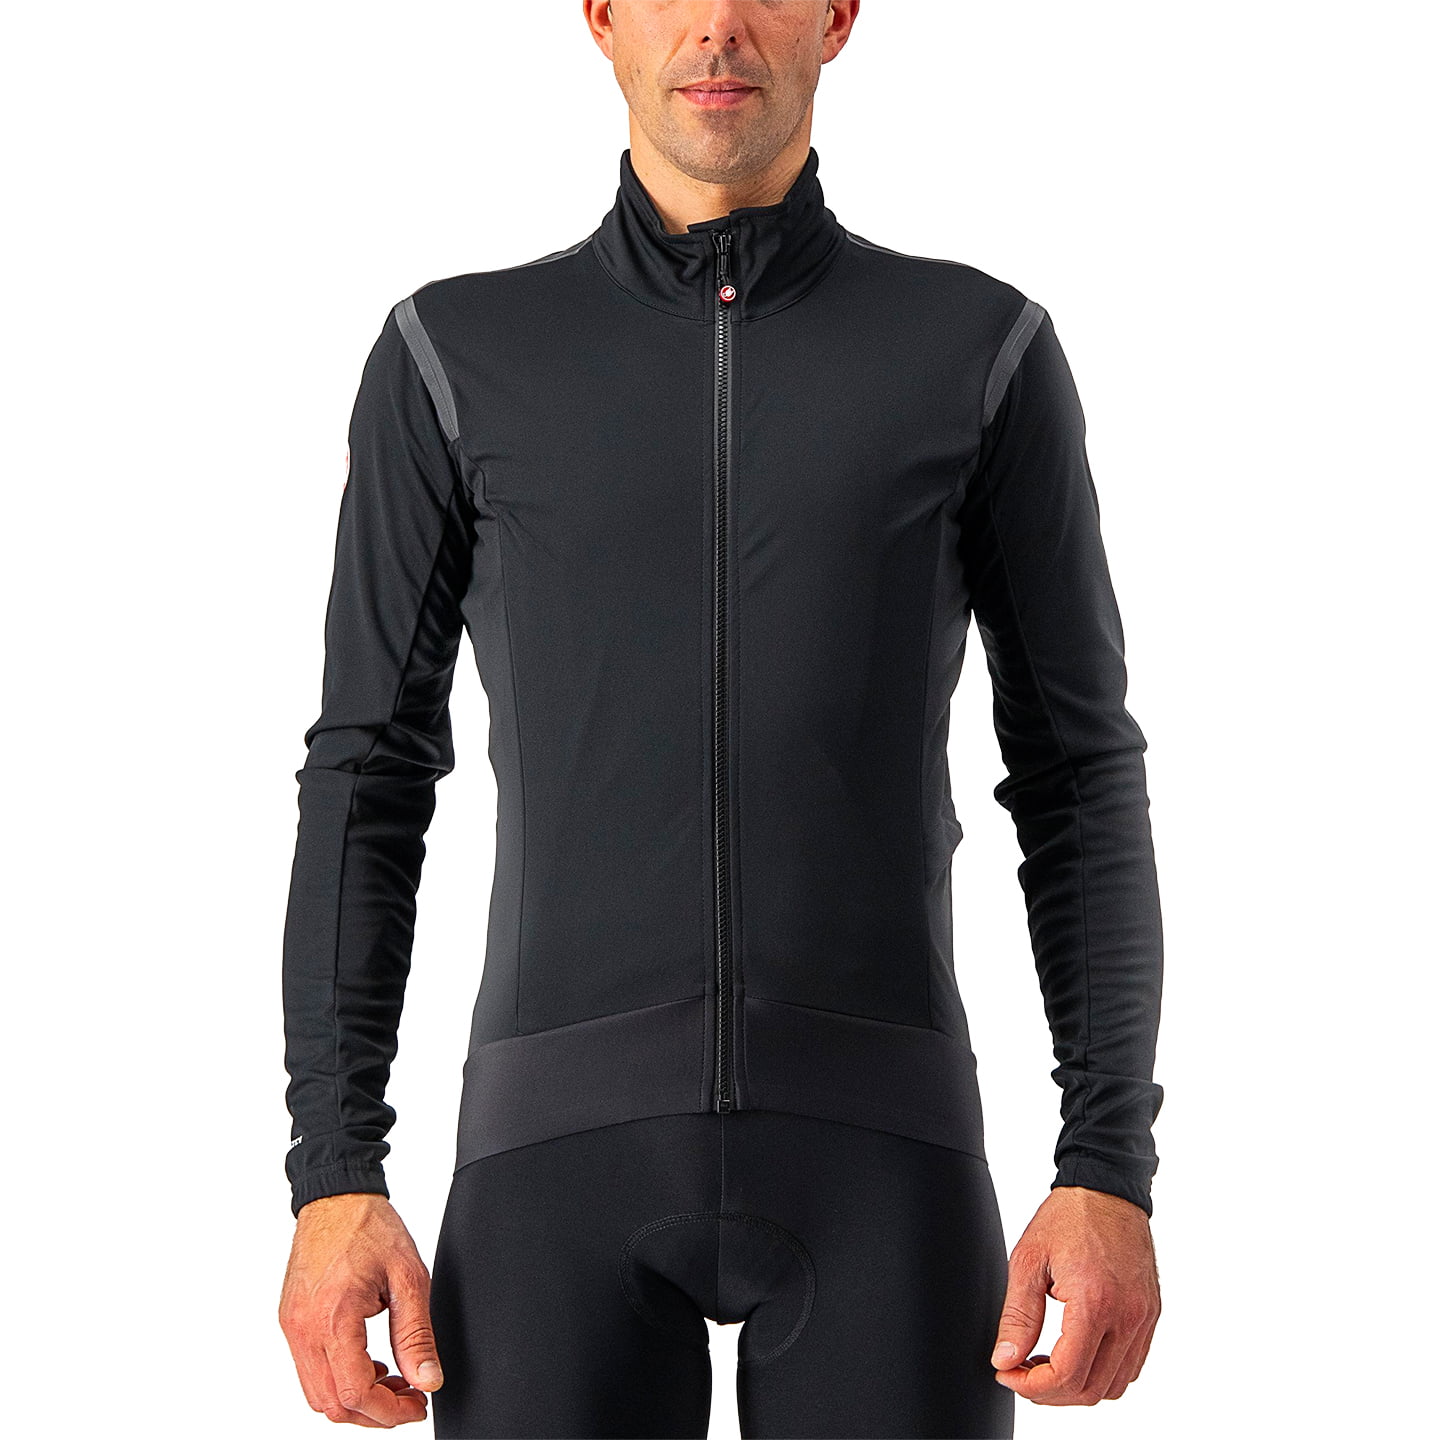 CASTELLI Alpha RoS 2 Light Jacket Light Jacket, for men, size M, Bike jacket, Cycling clothing